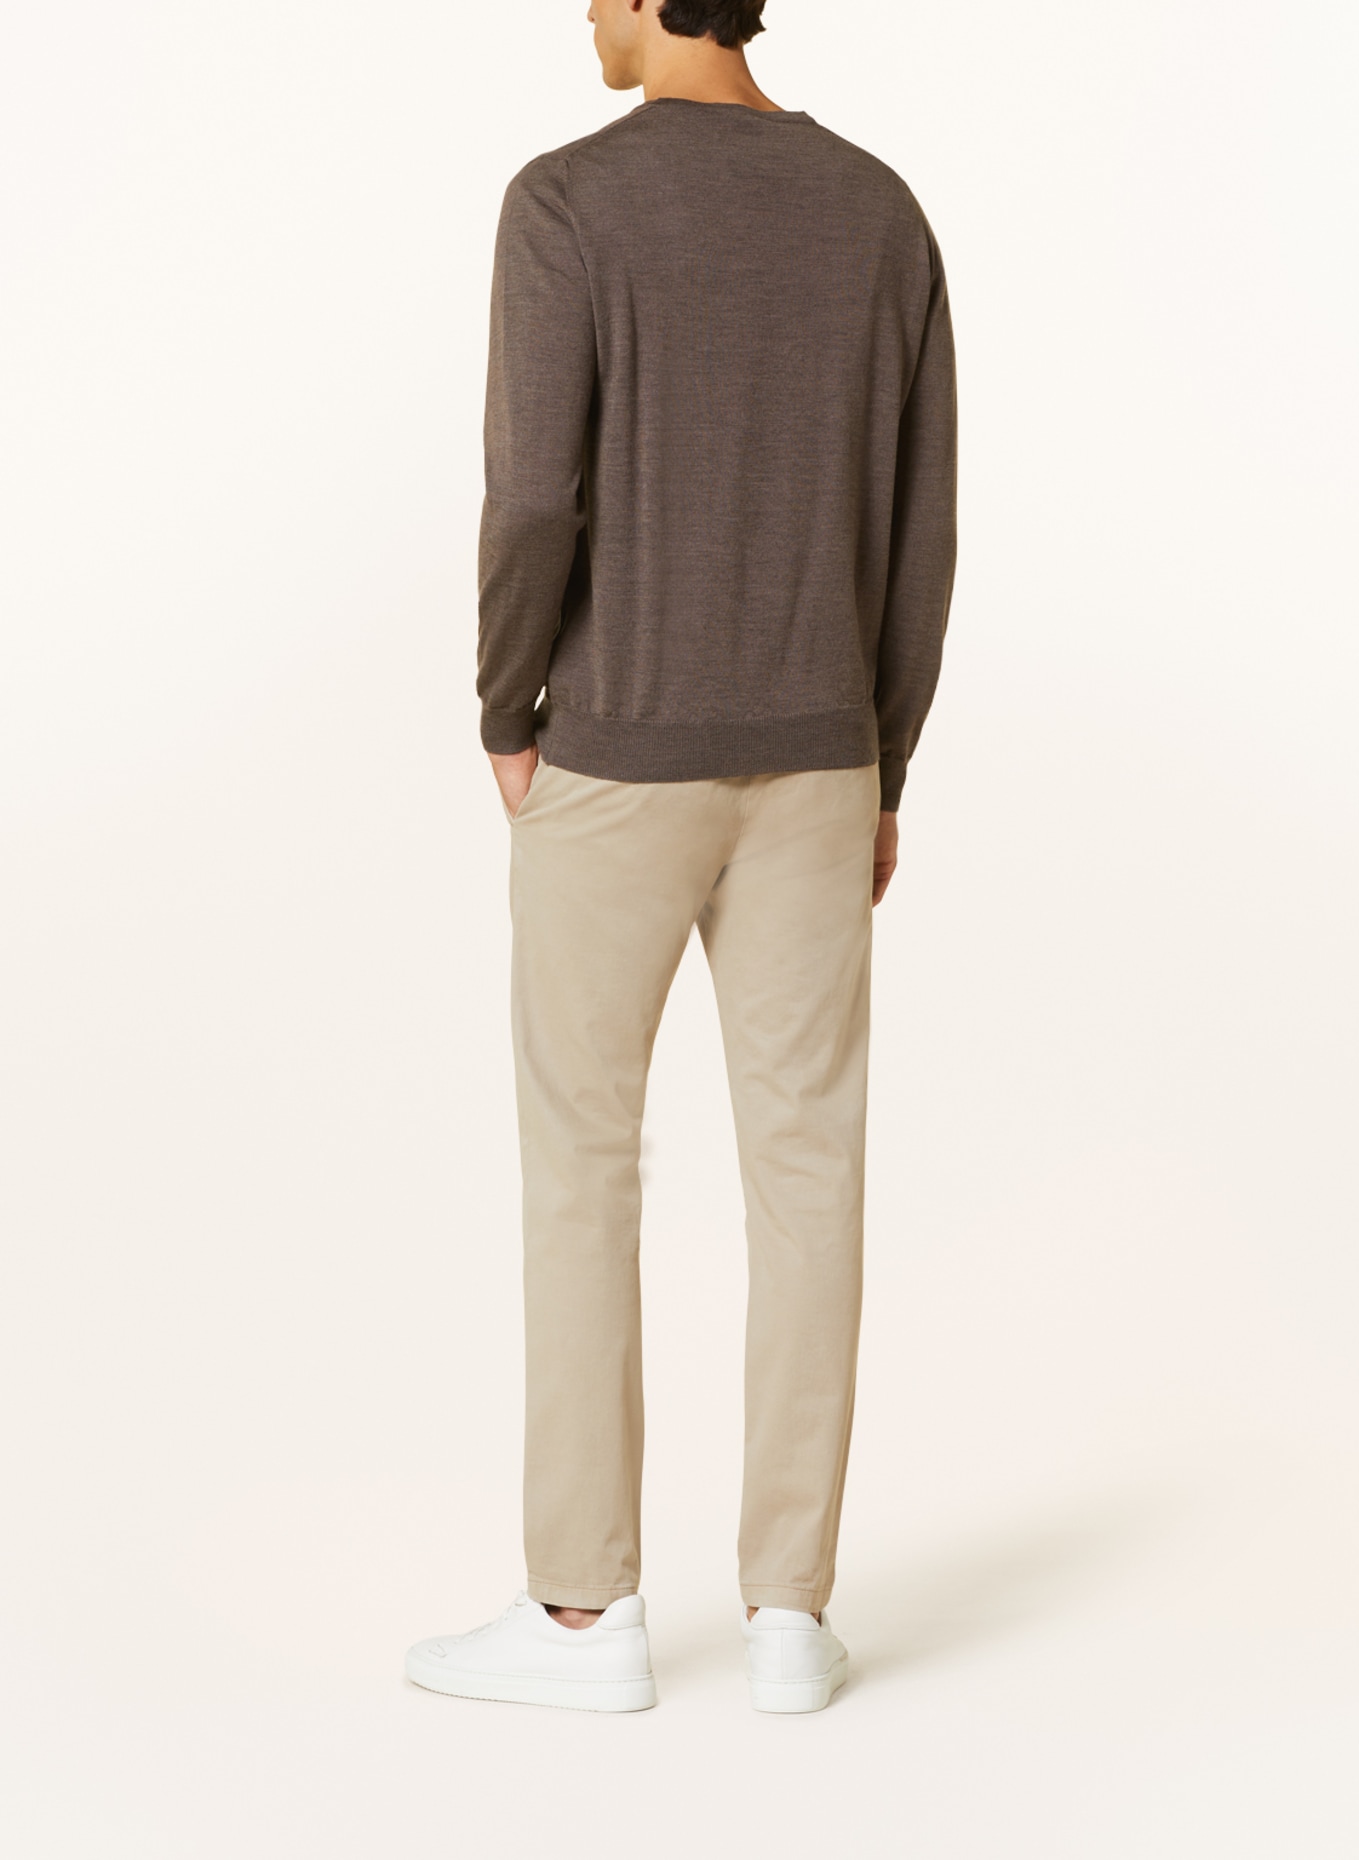 EDUARD DRESSLER Pullover, Farbe: BRAUN (Bild 3)